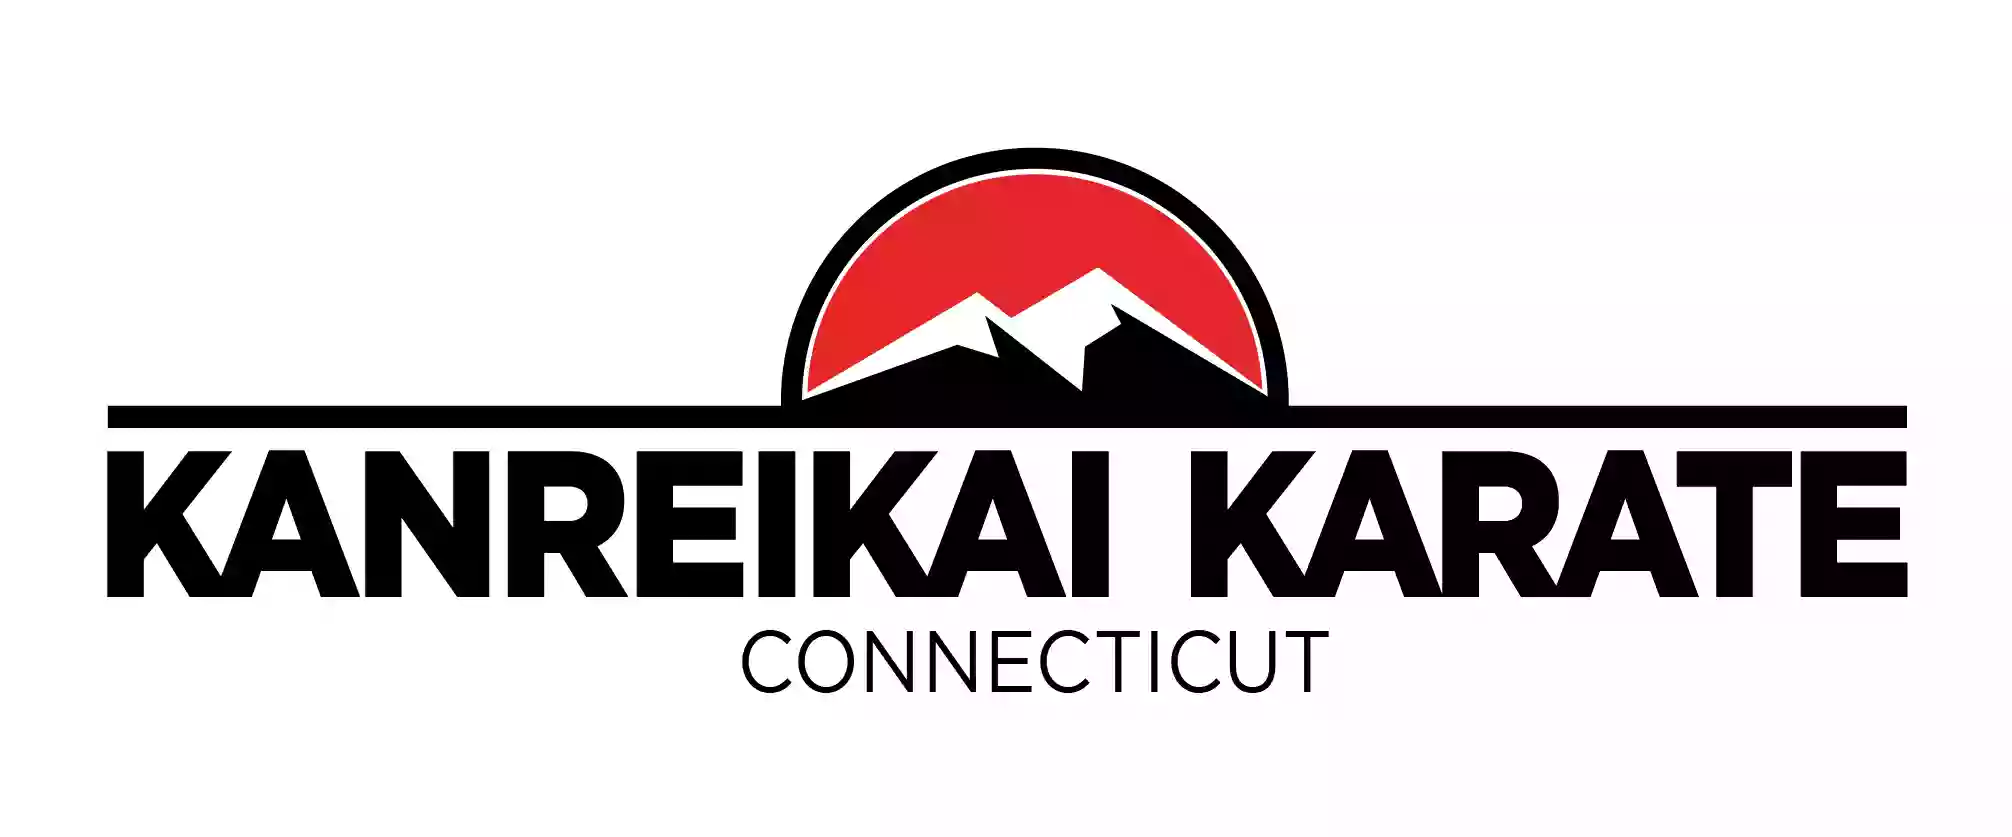 Kanreikai Karate of Connecticut